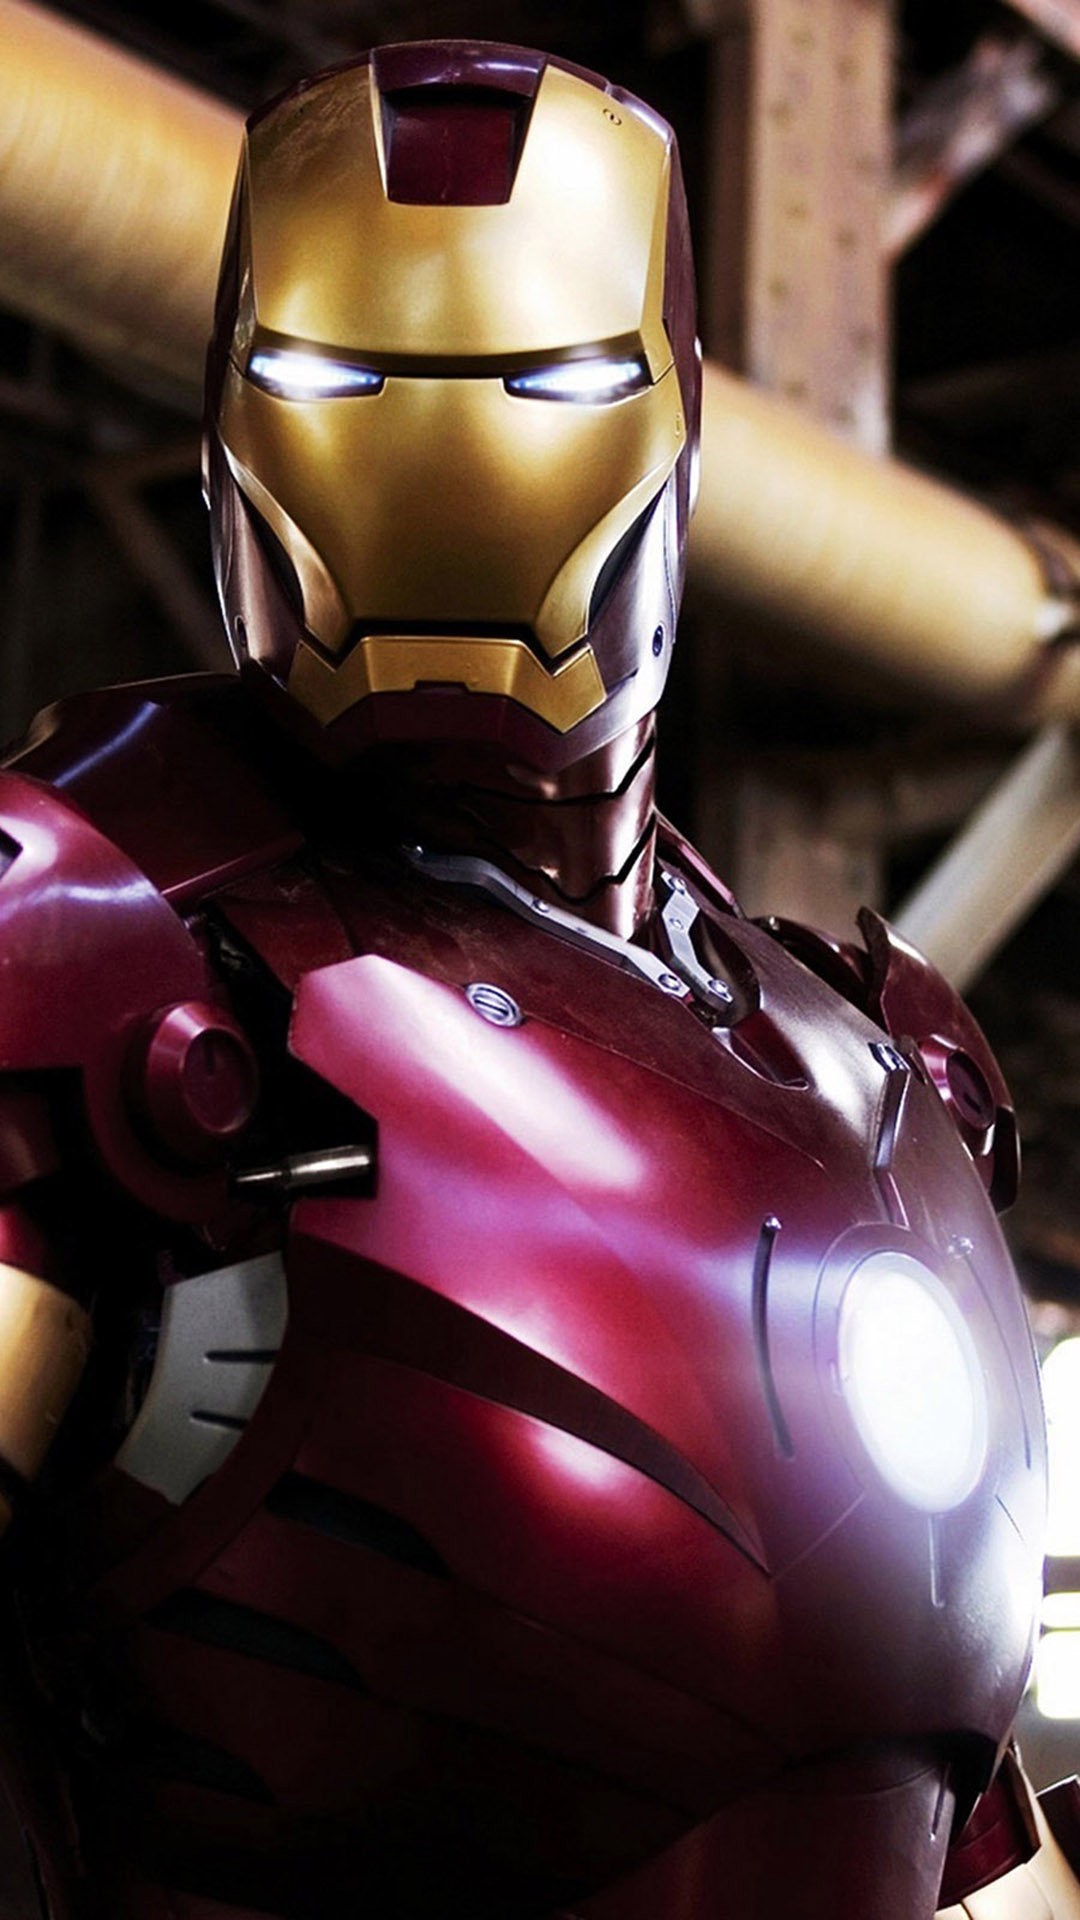 iron man wallpaper for iphone 6,iron man,superhero,fictional character,suit actor,action figure